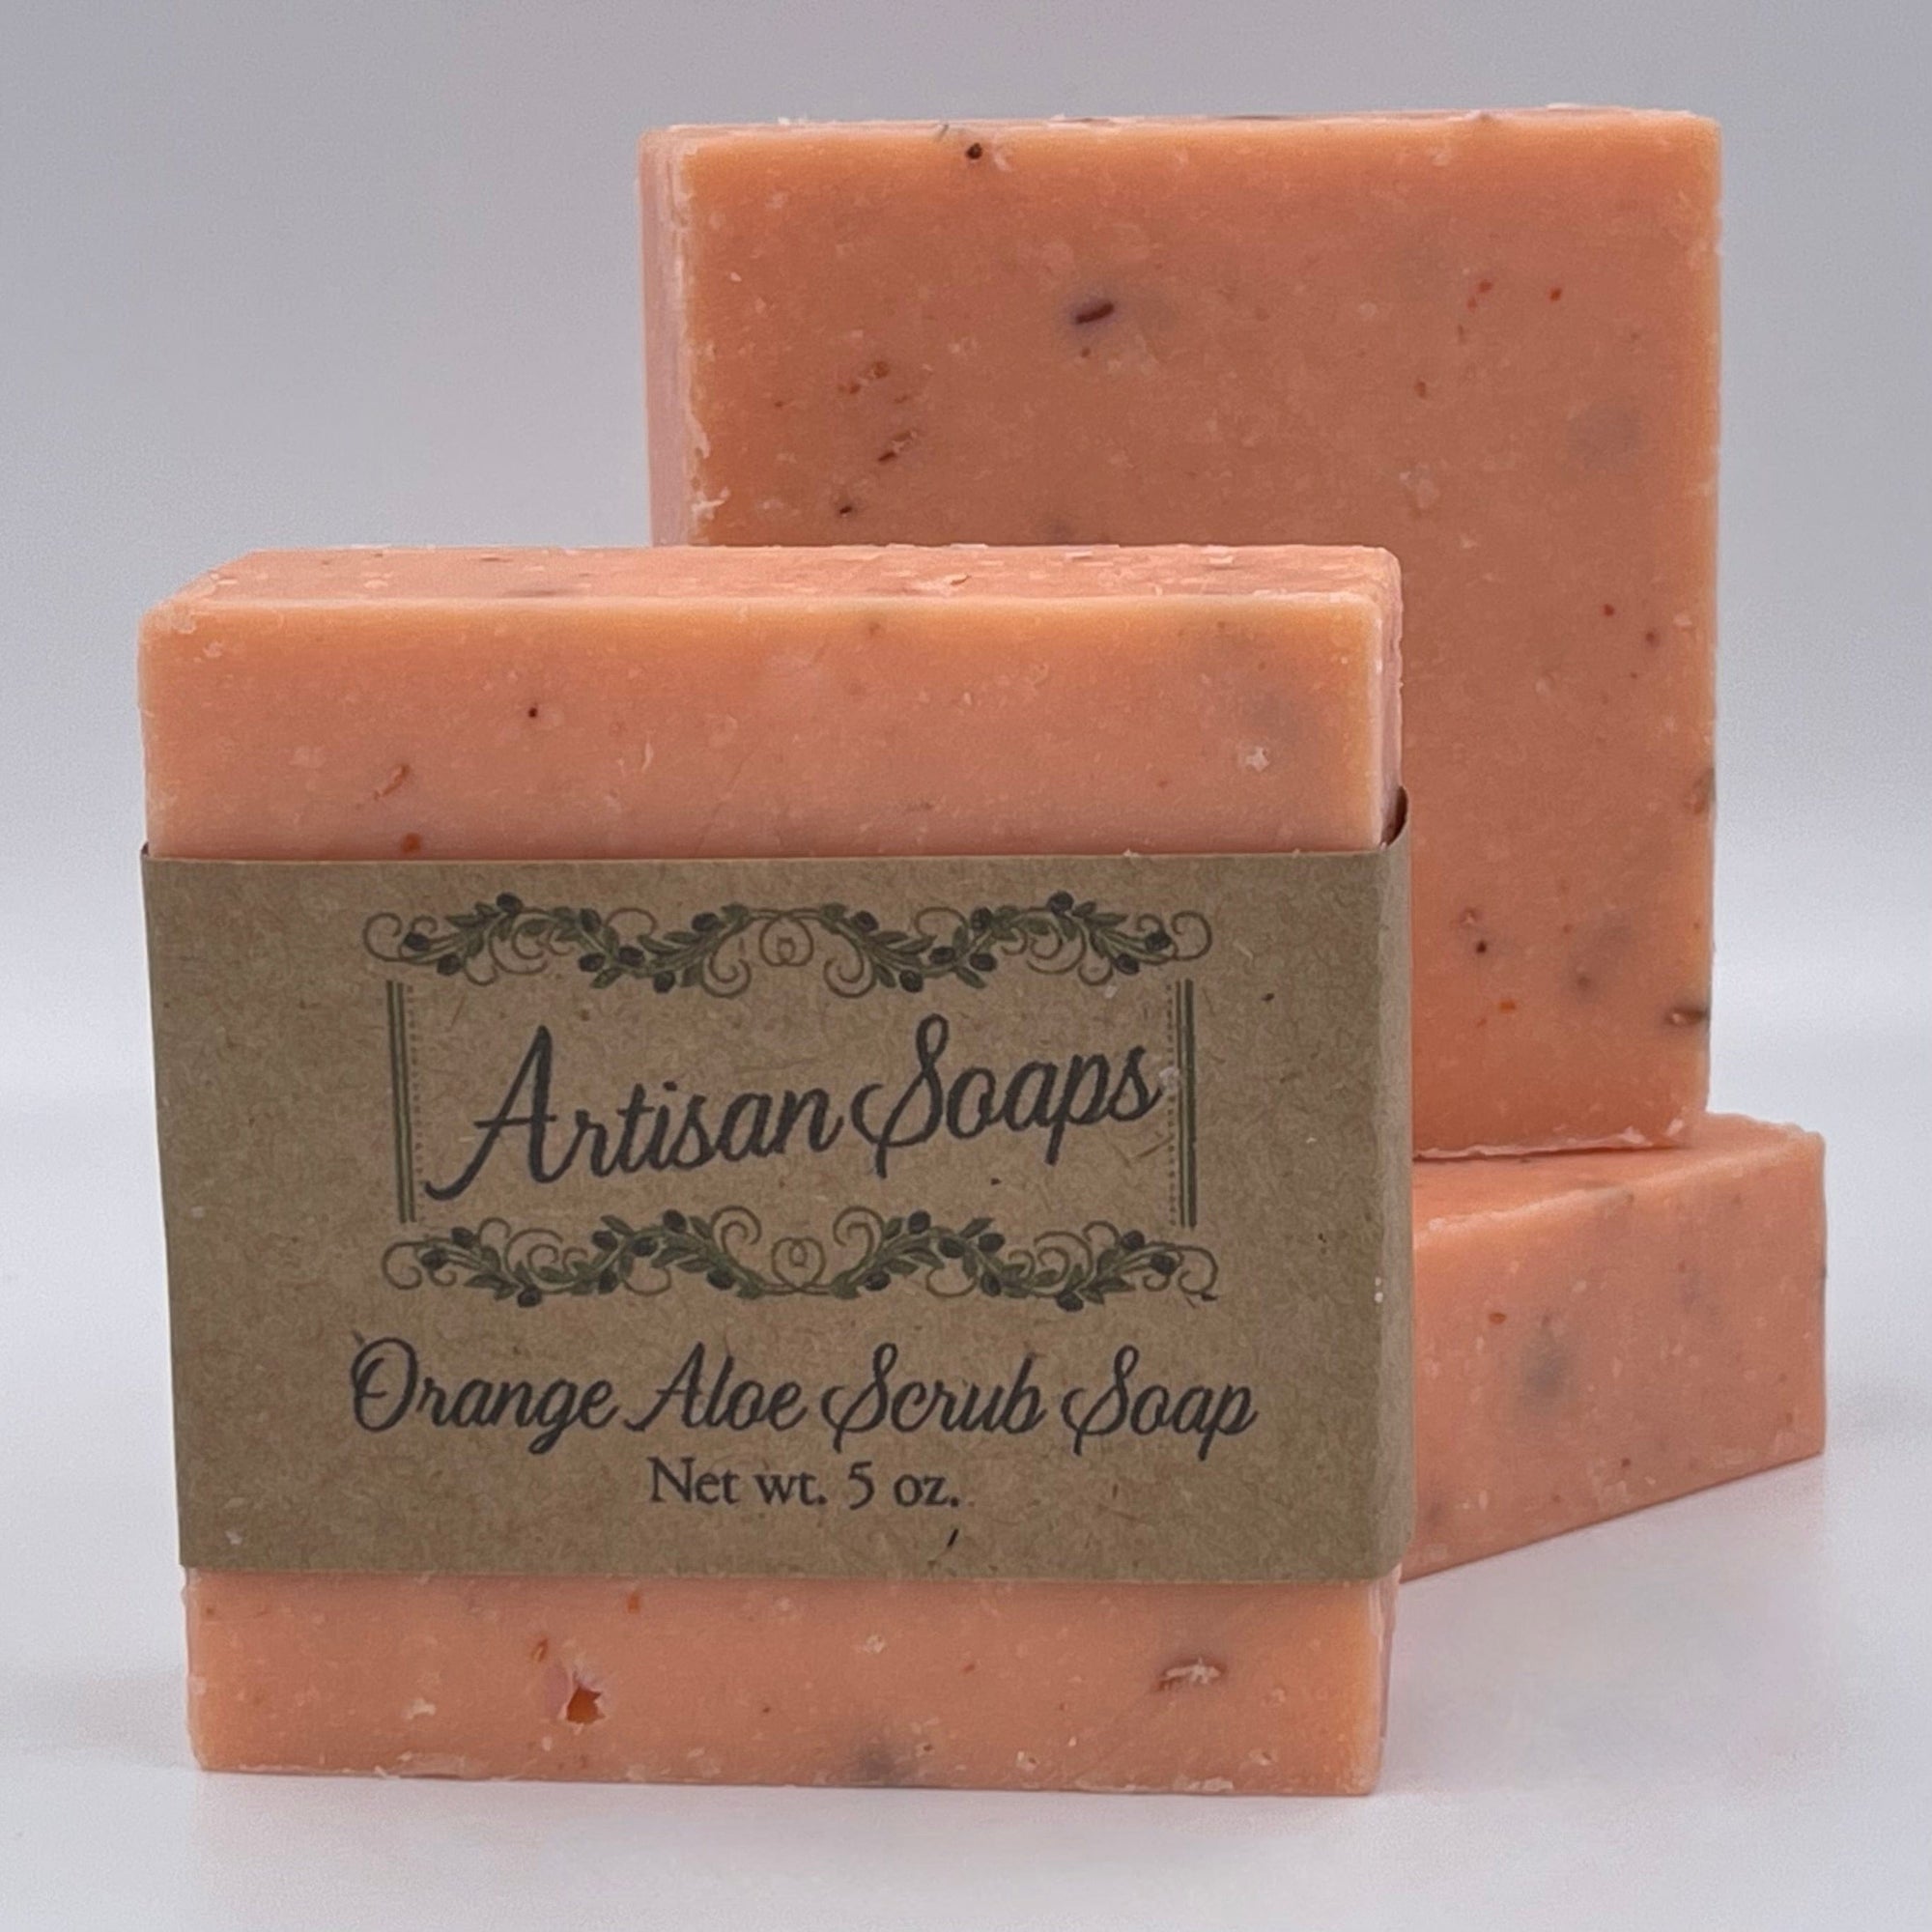 Orange Aloe Scrub Soap